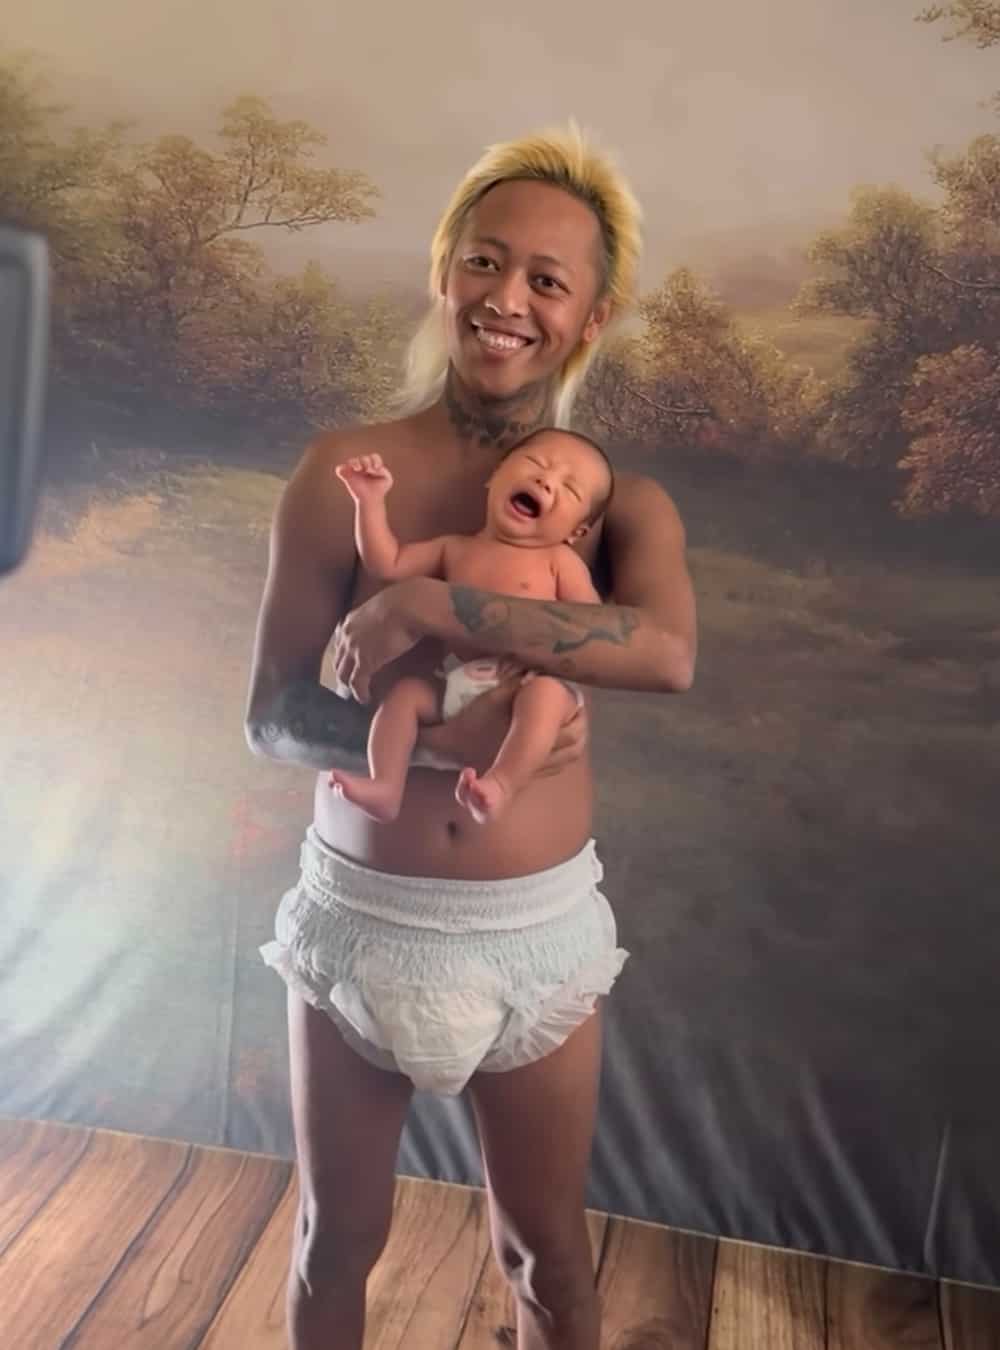 Whamos Cruz, nagpa-photoshoot kasama si Baby Meteor: “like father like son”